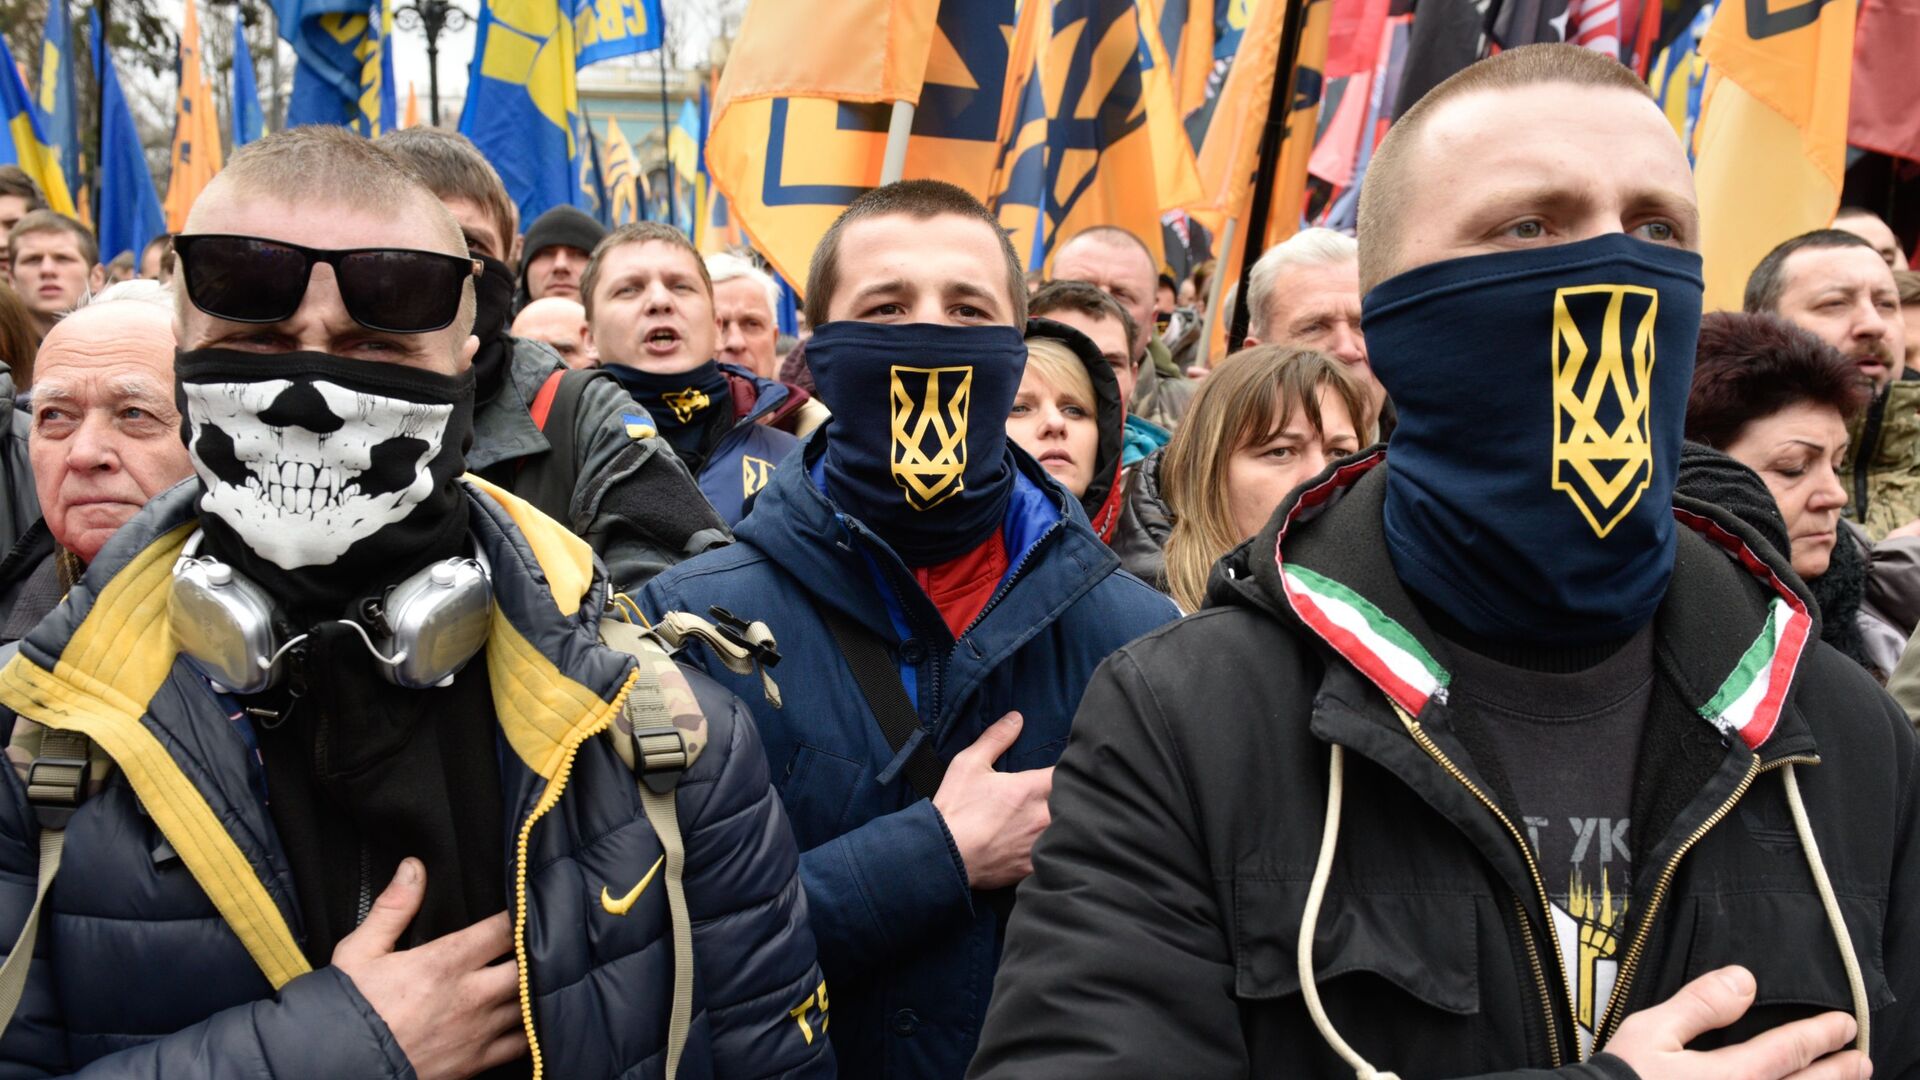 Unos manifestantes radicales durante las protestas en Kiev, Ucrania - Sputnik Mundo, 1920, 17.12.2021